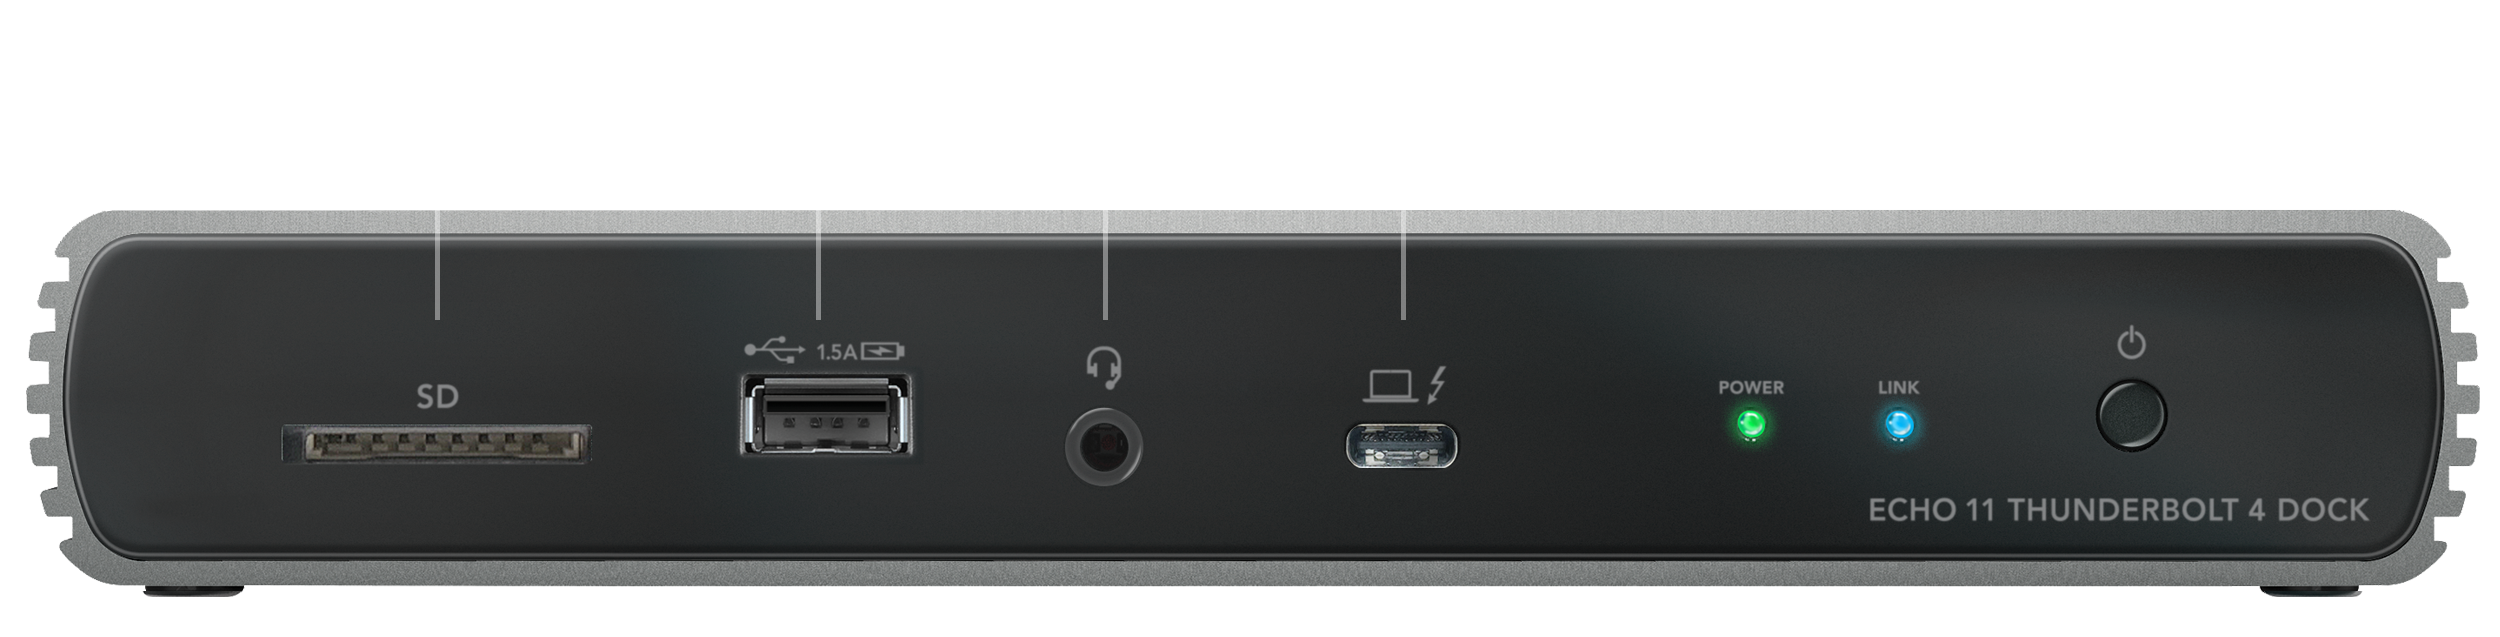 Echo 11 Thunderbolt 4 Dock Front Panel